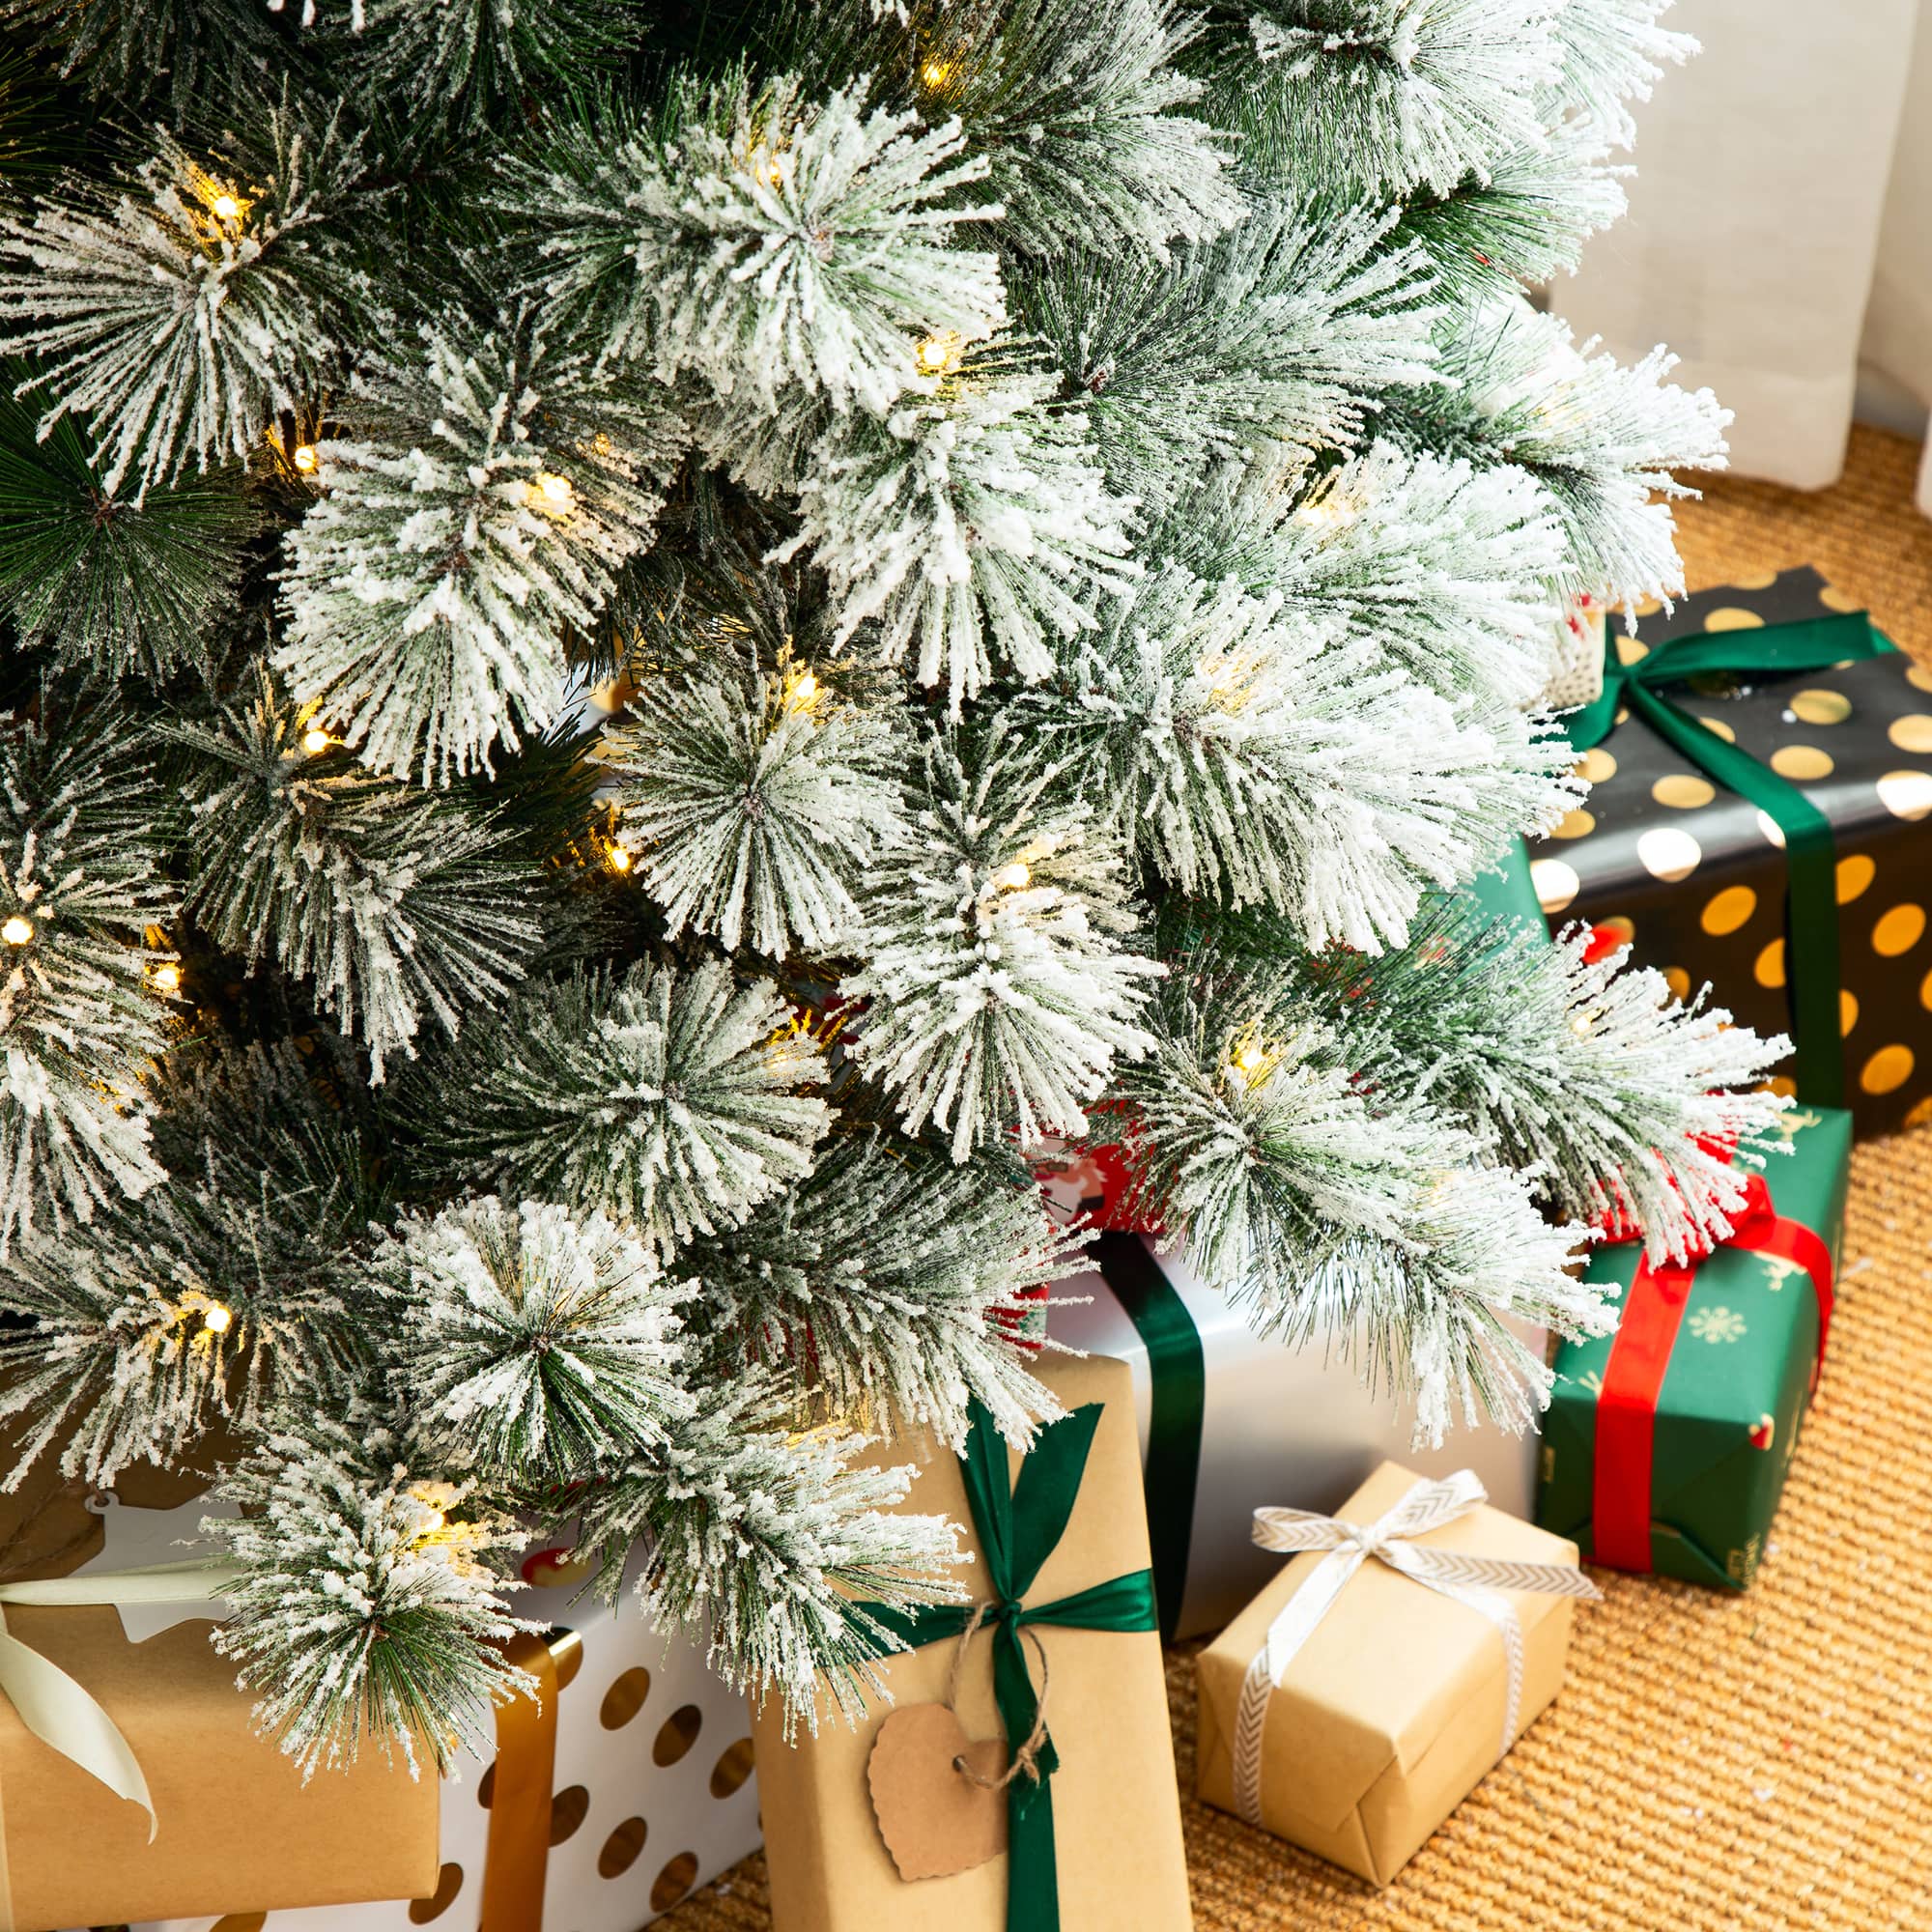 7.5ft Pre-Lit Flocked Pine Artificial Christmas Tree, Warm White LED Lights